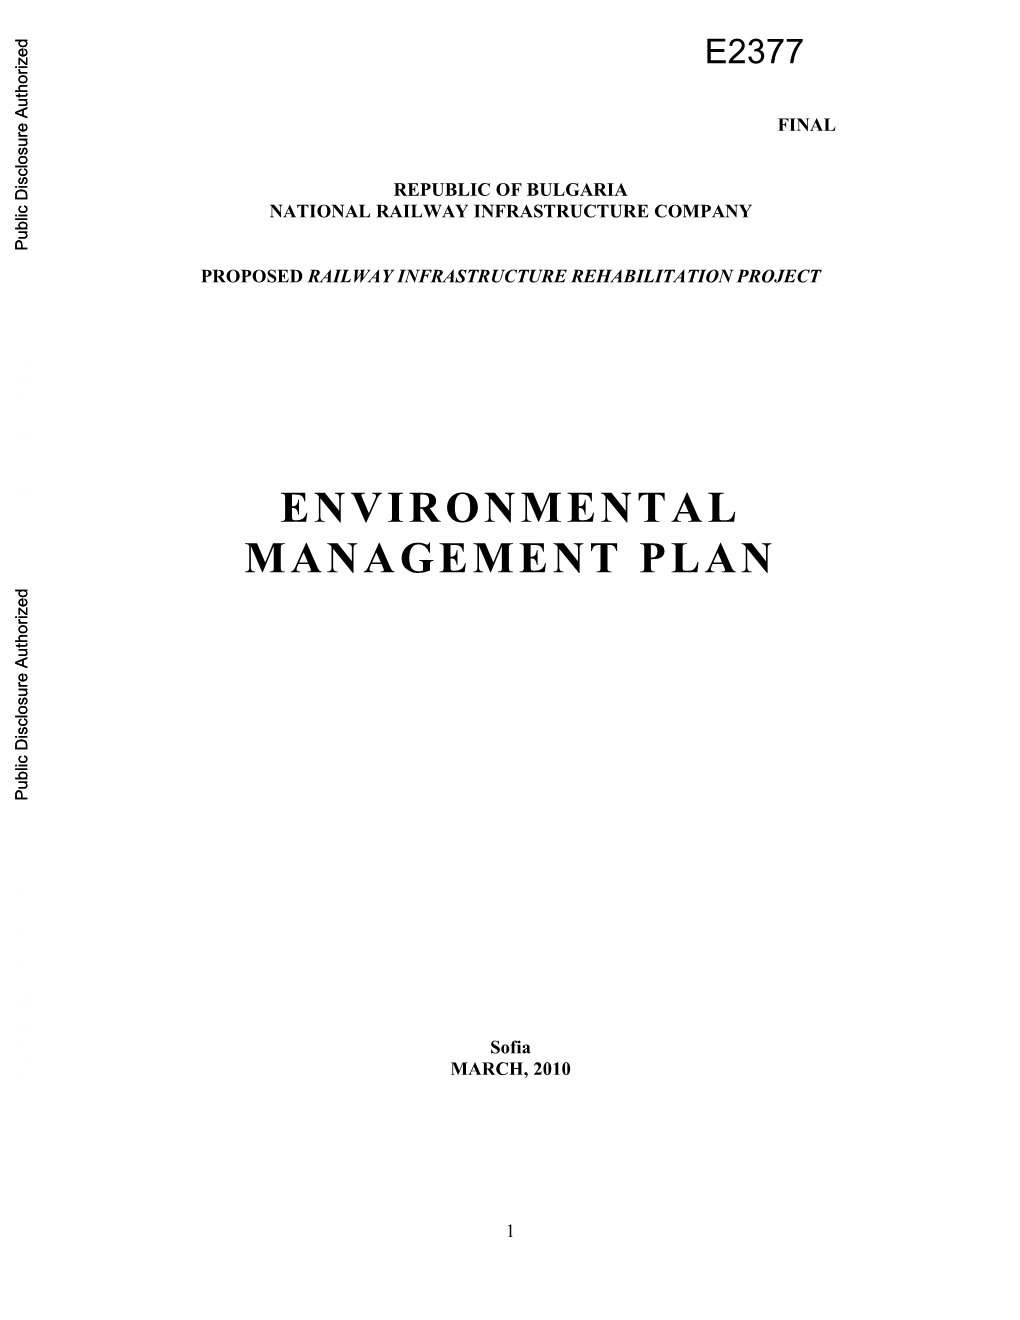 Environmental Mitigation Plan